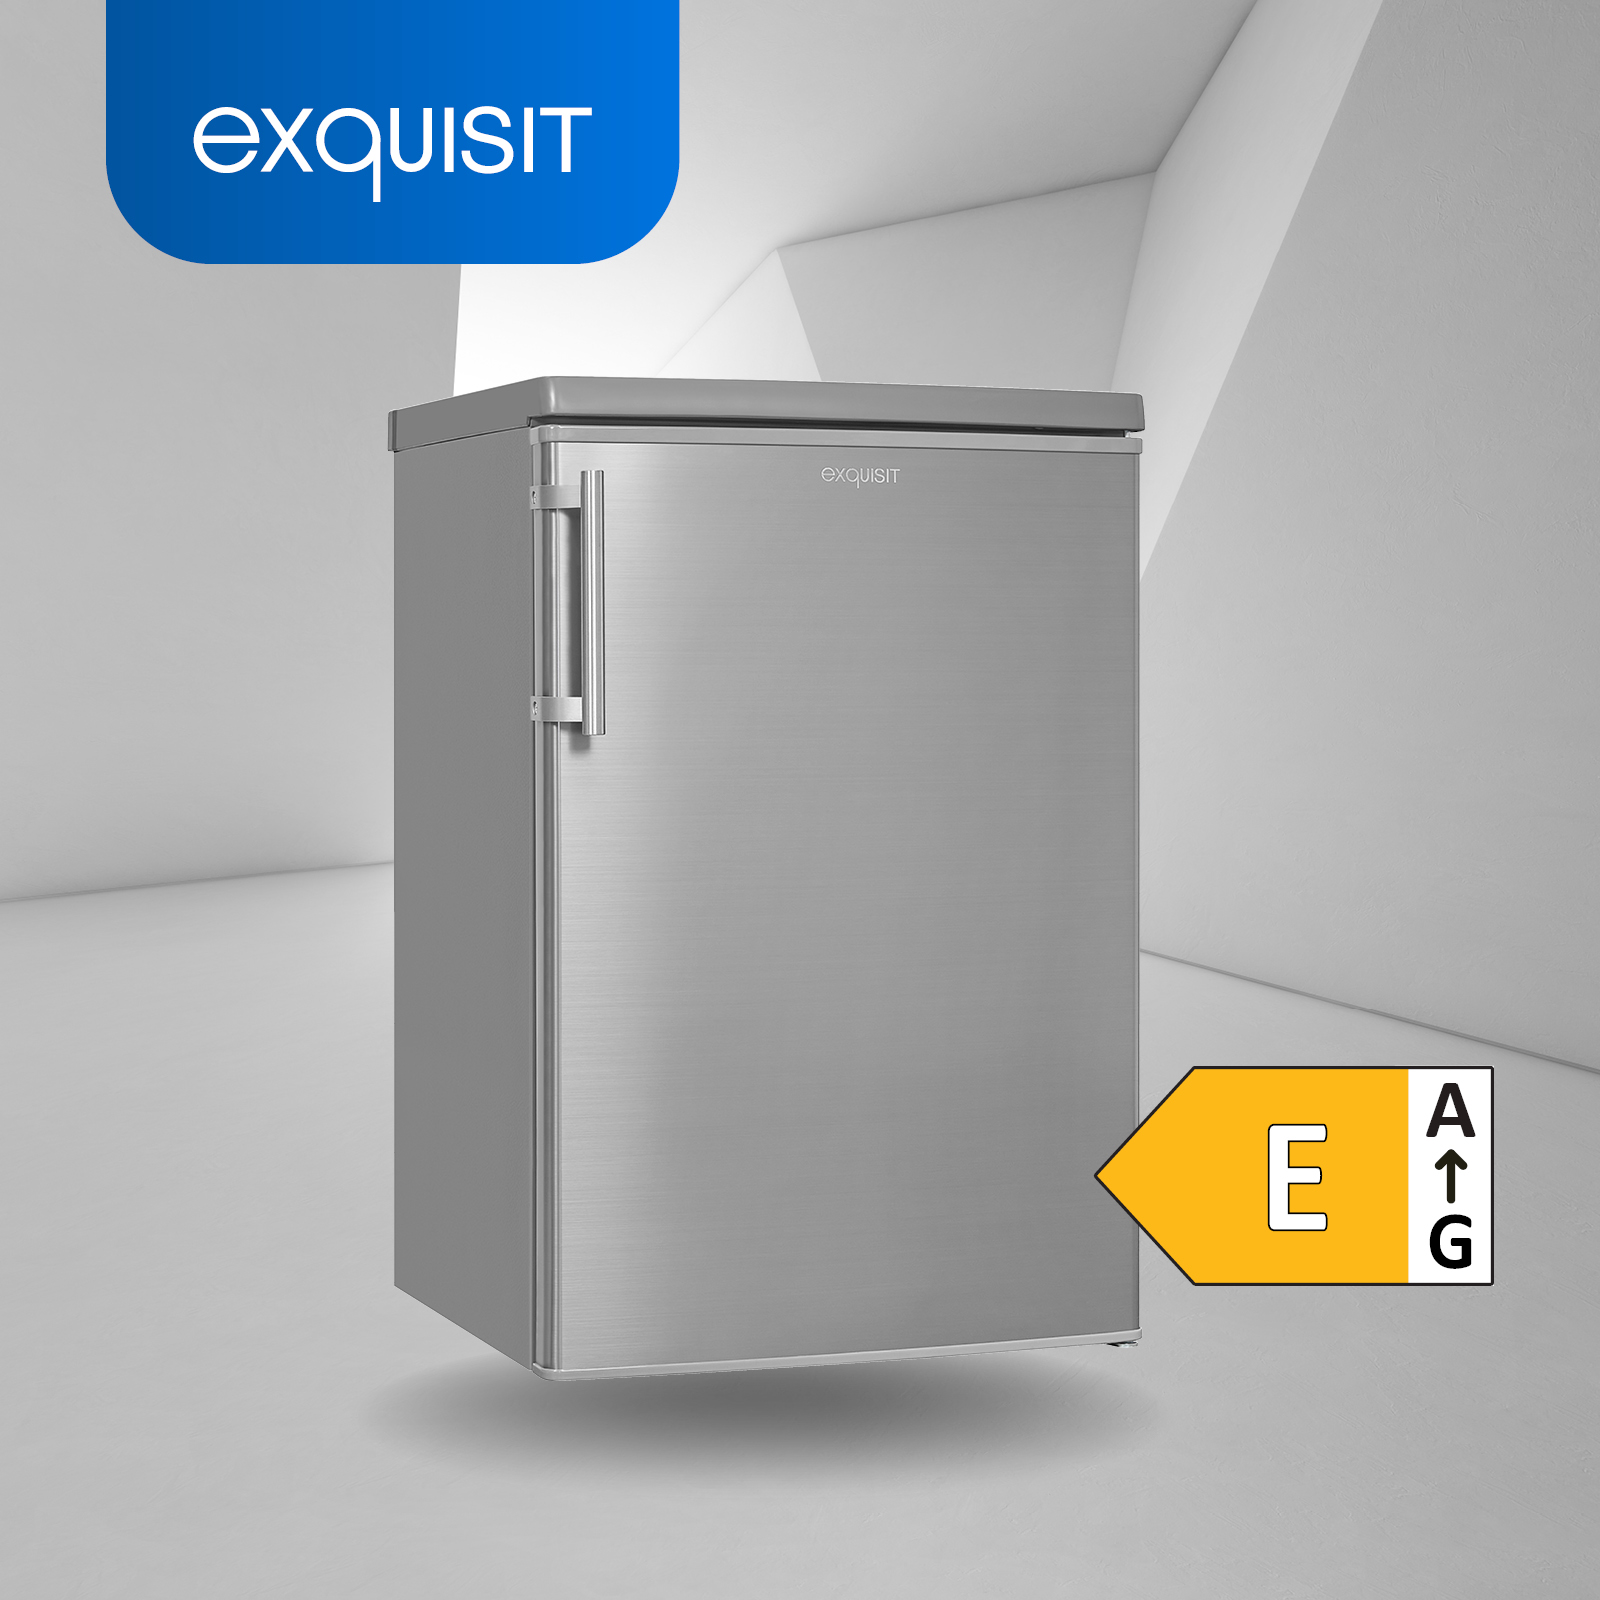 inoxlook KS16-4-HE-040E E, EXQUISIT mm 855 (139,00 Edelstahloptik) Kühlschrank kWh/Jahr, hoch,